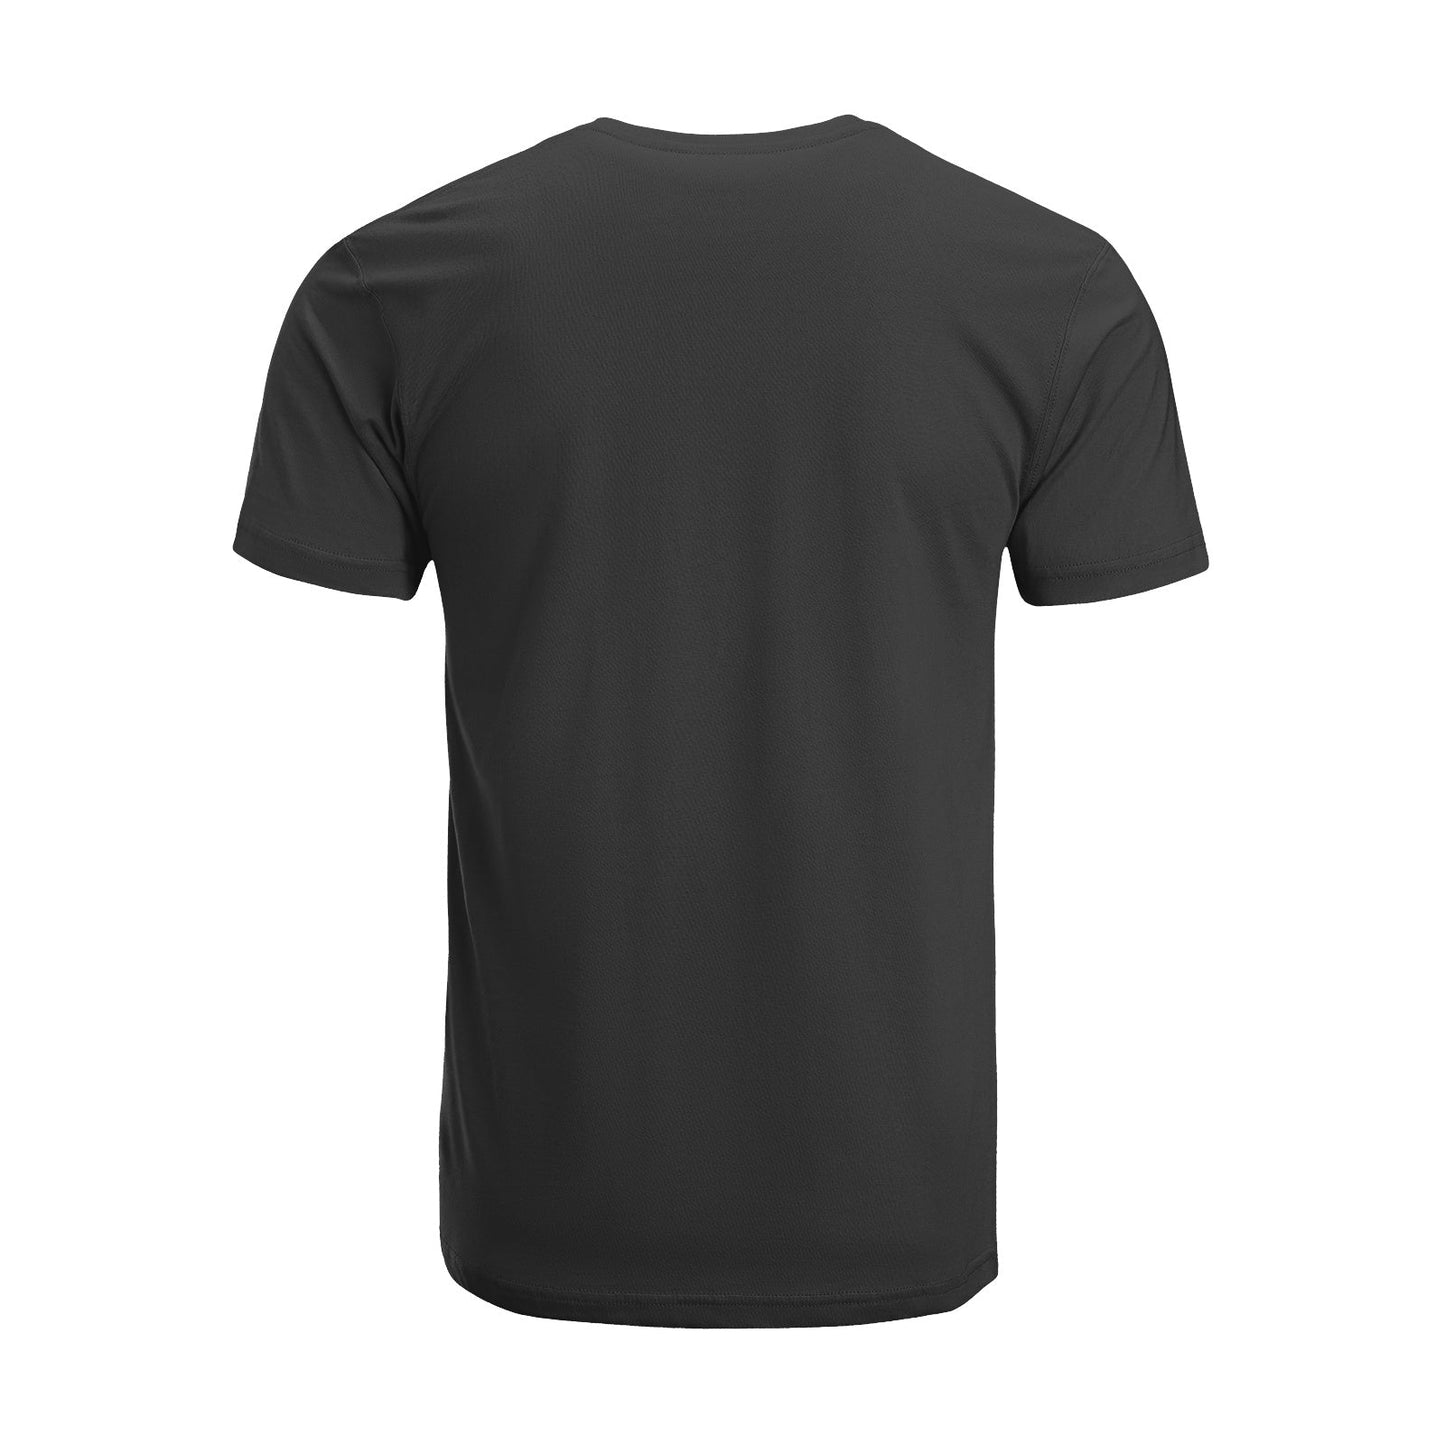 Unisex Short Sleeve Crew Neck Cotton Jersey T-Shirt VEGAN 02